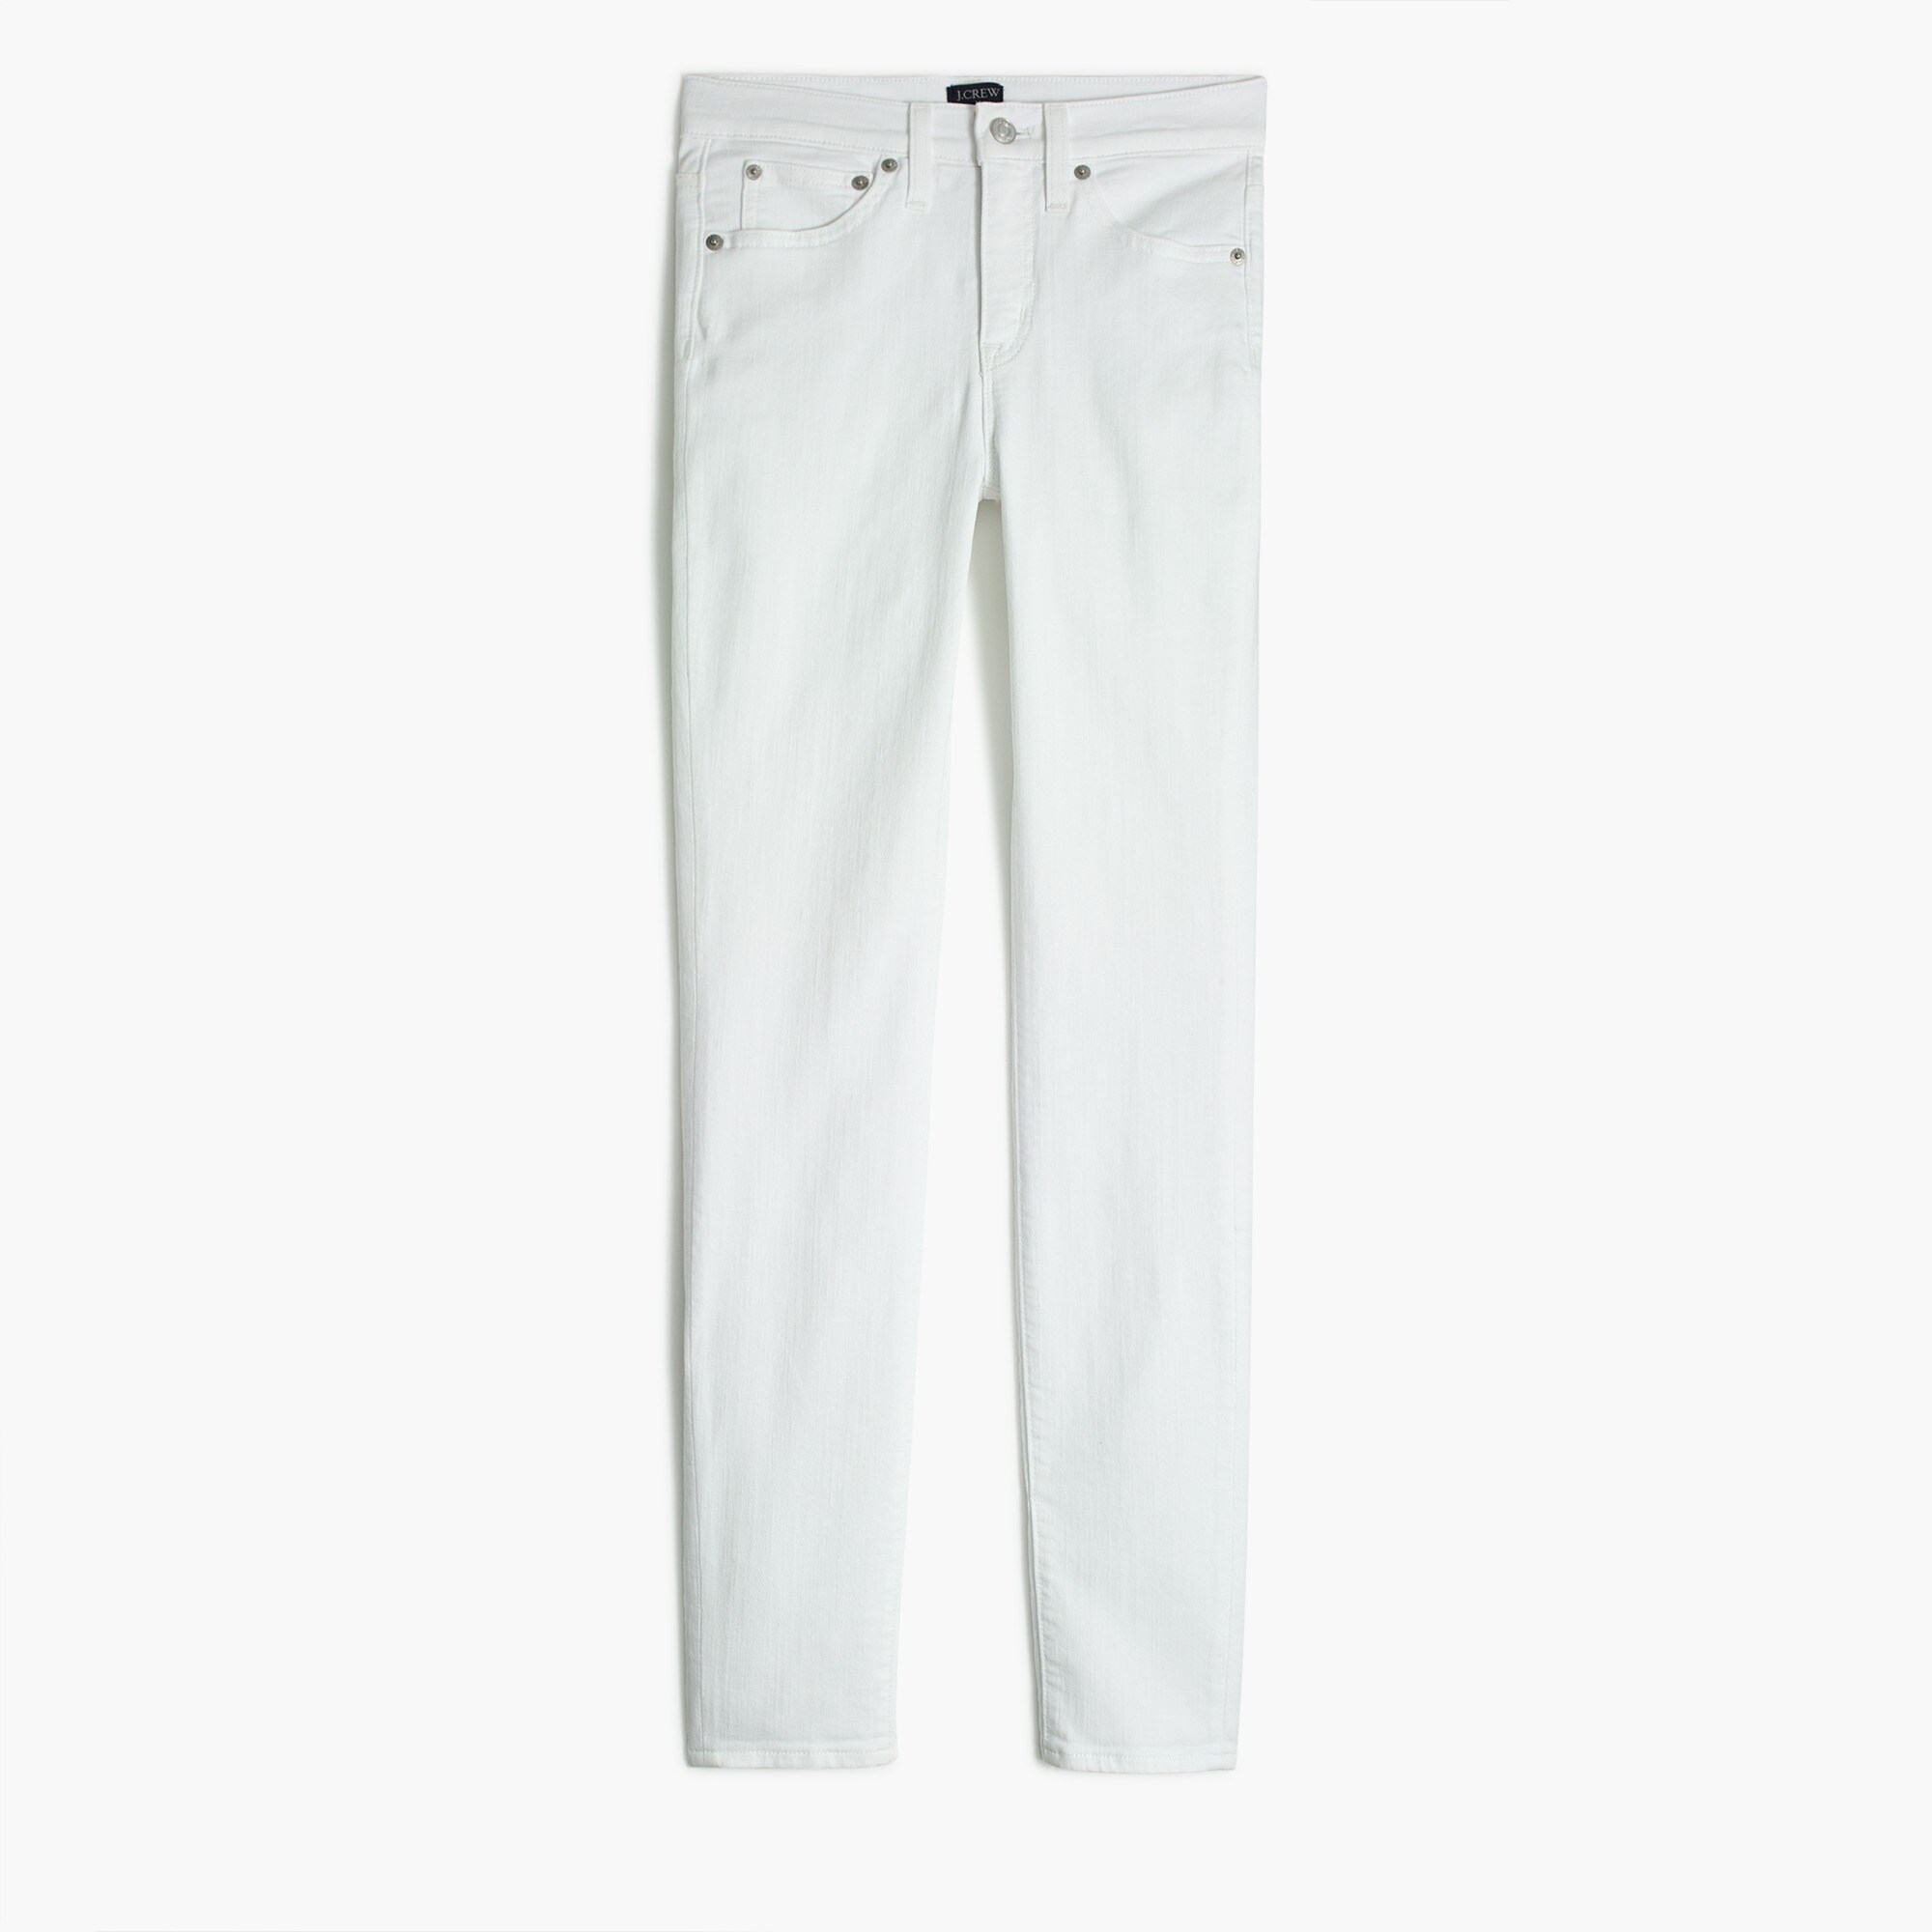  9" mid-rise white skinny jean in signature stretch